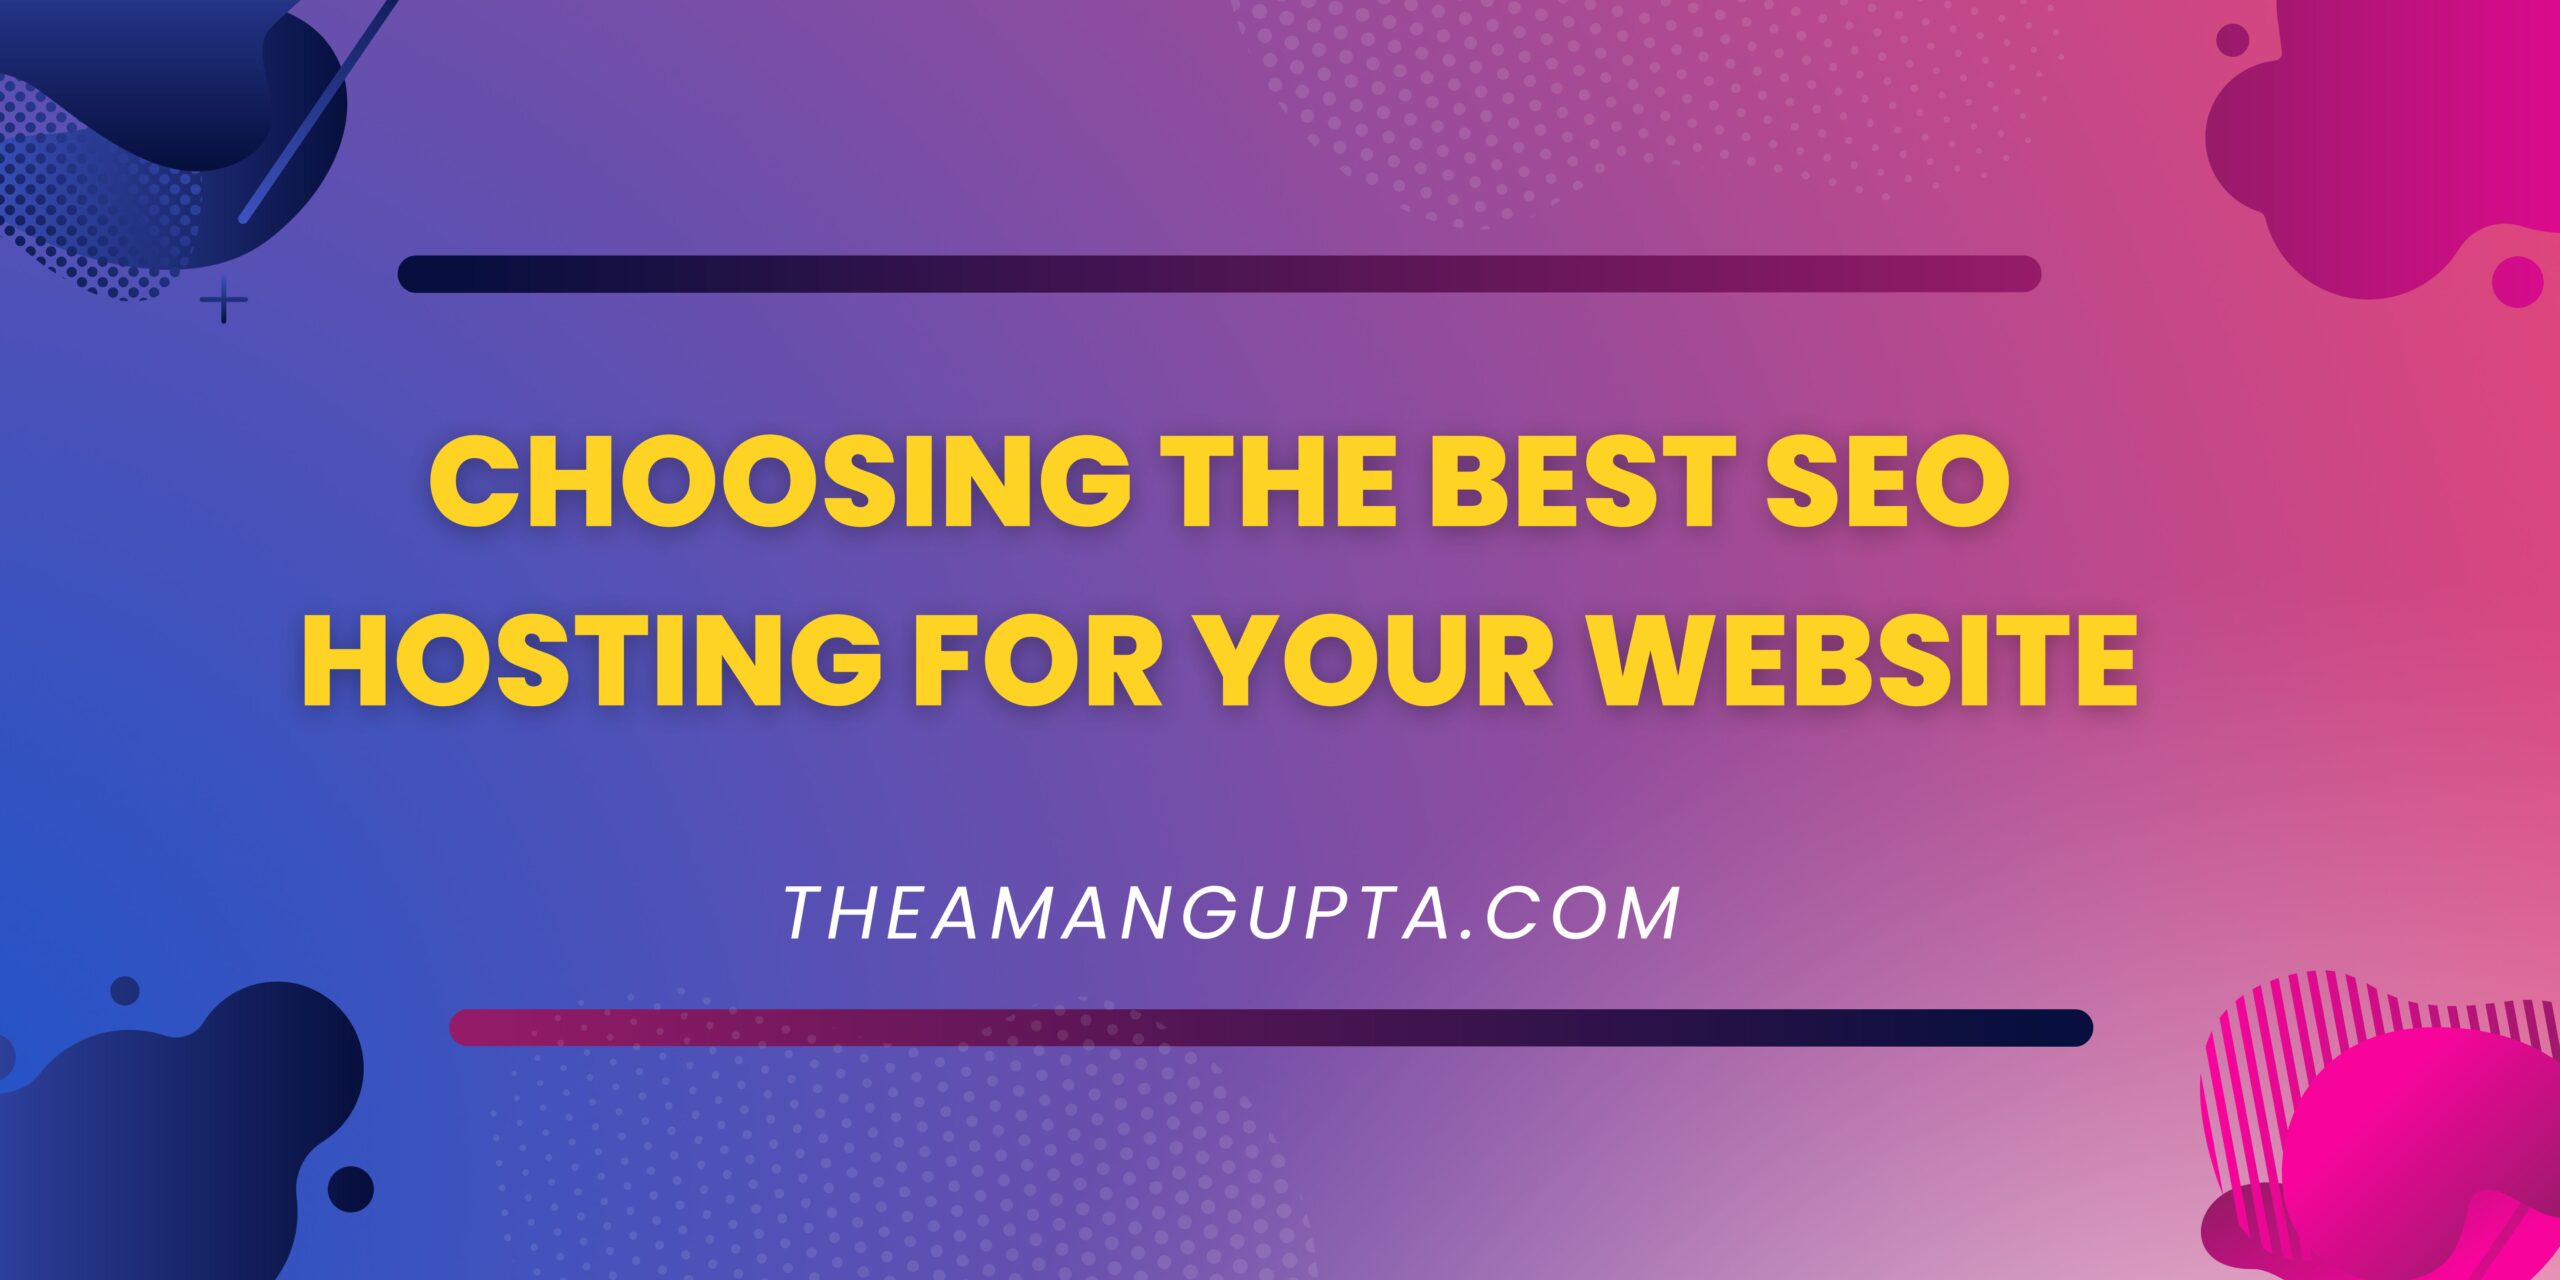 Choosing The Best SEO Hosting For Your Website|Hosting For Website|Theamangupta|Theamangupta